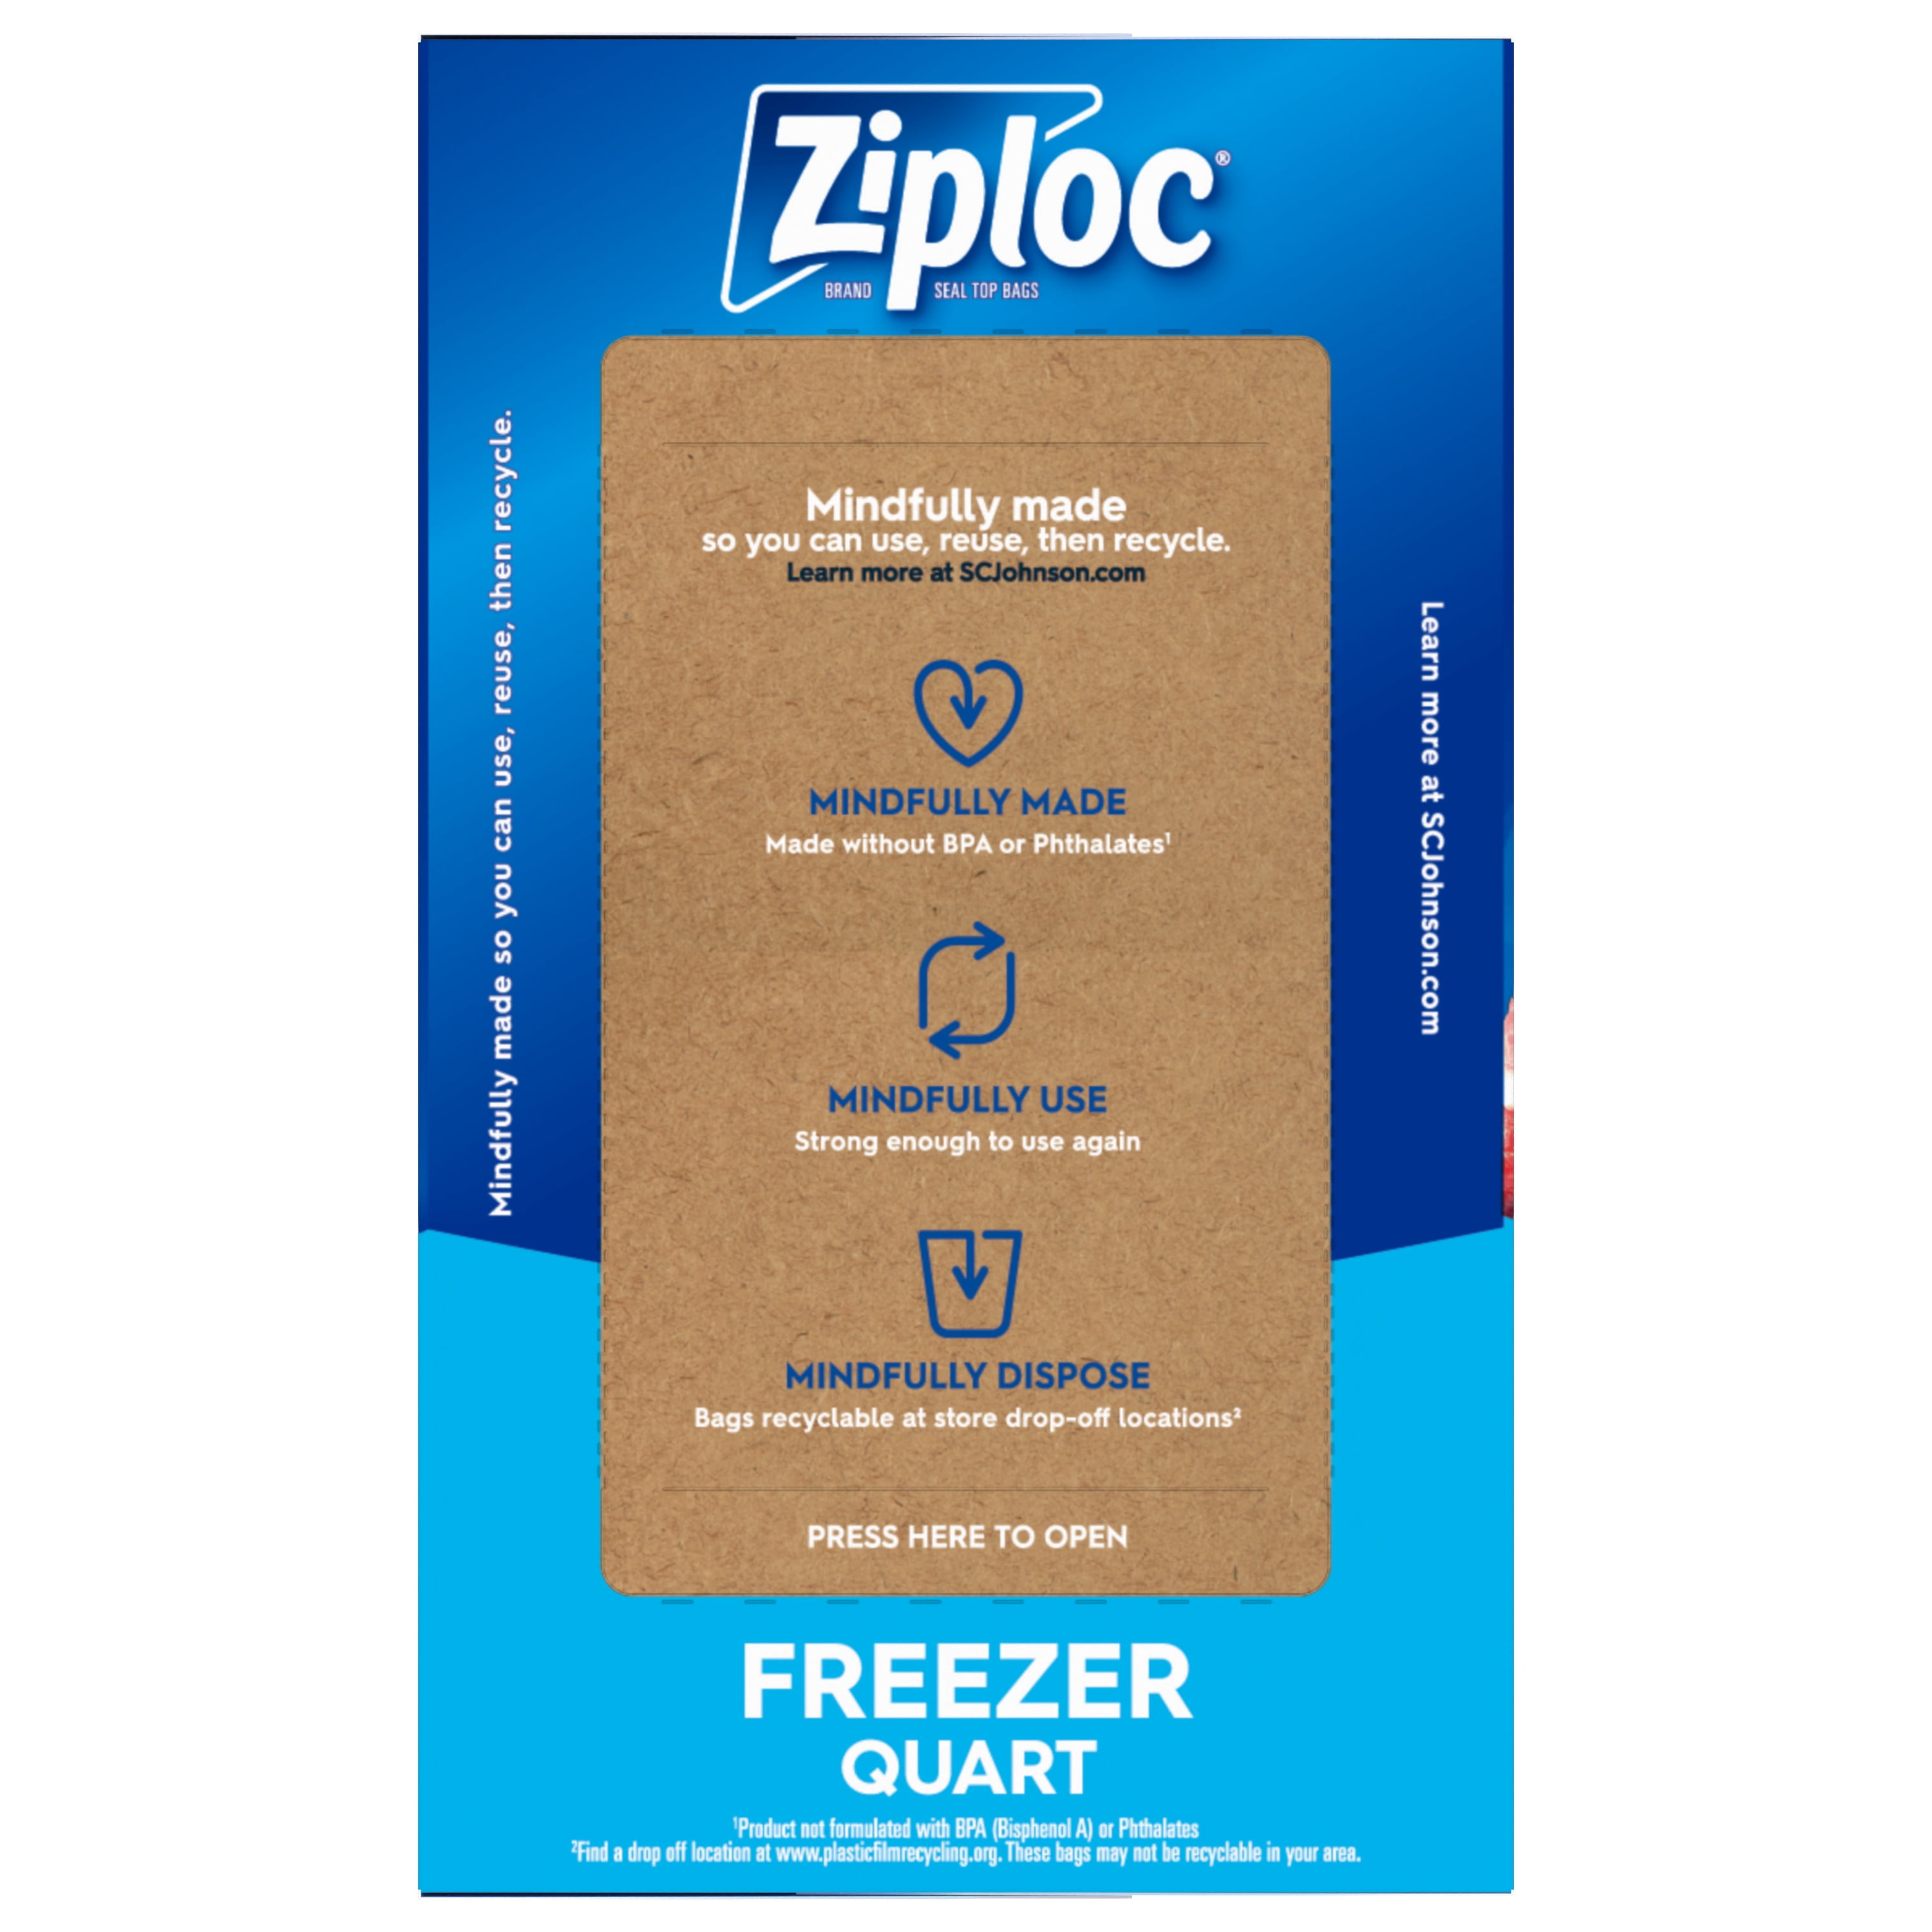 Ziploc® Brand Freezer Bags with New Stay Open Design, Quart, 75